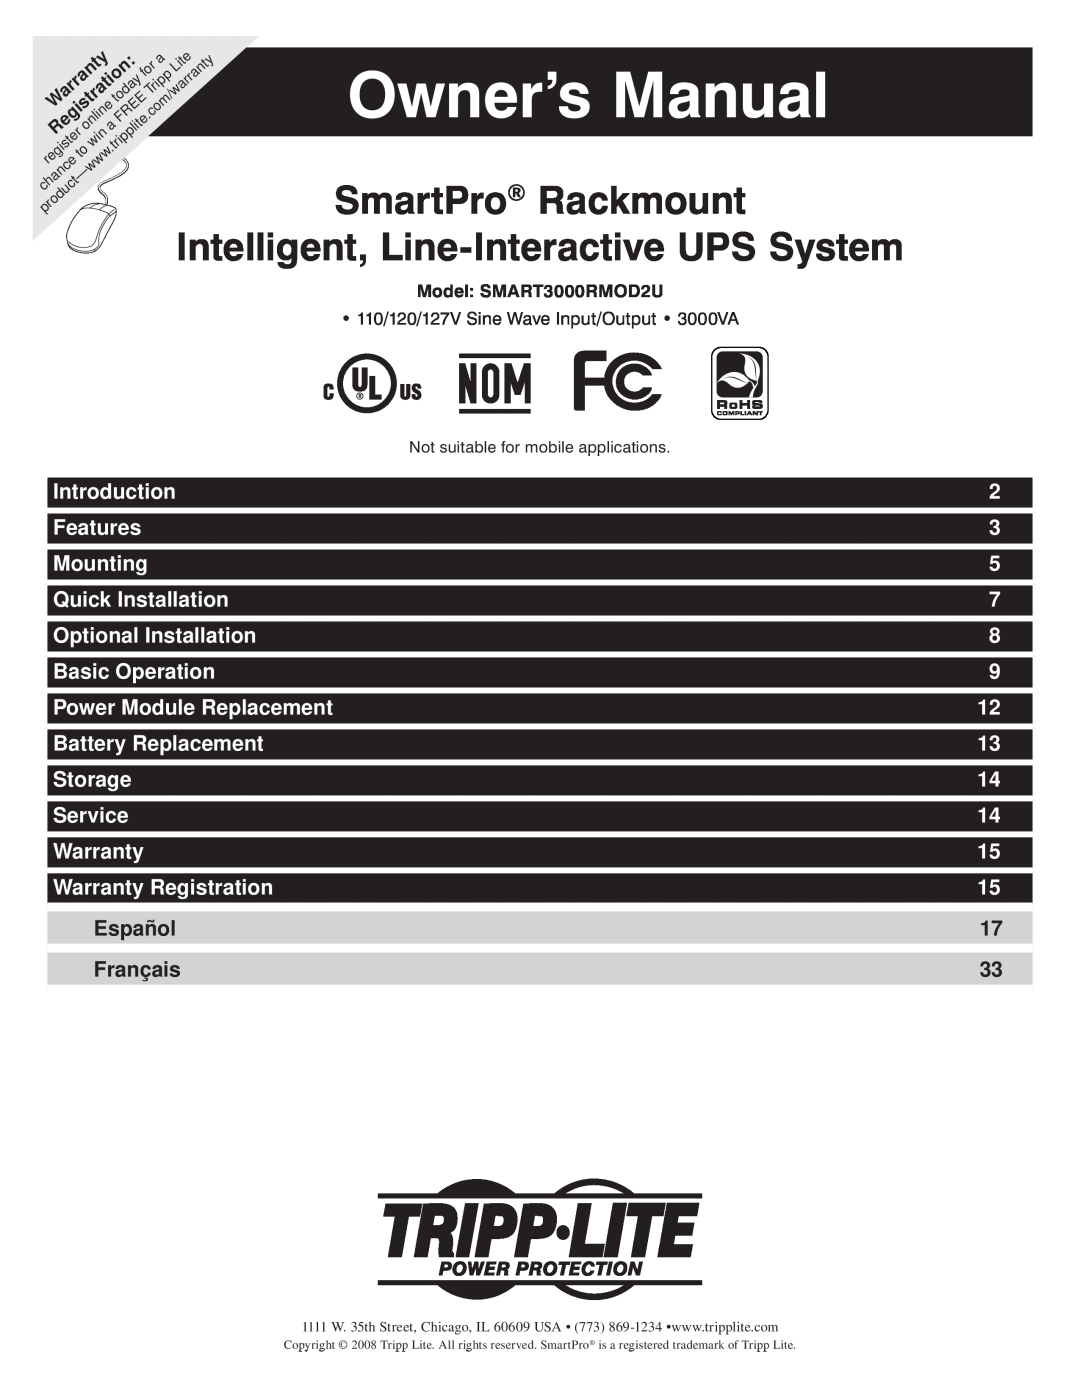 Tripp Lite SMART3000RMOD2U owner manual Owner’s Manual, SmartPro Rackmount, Intelligent, Line-Interactive UPS System 